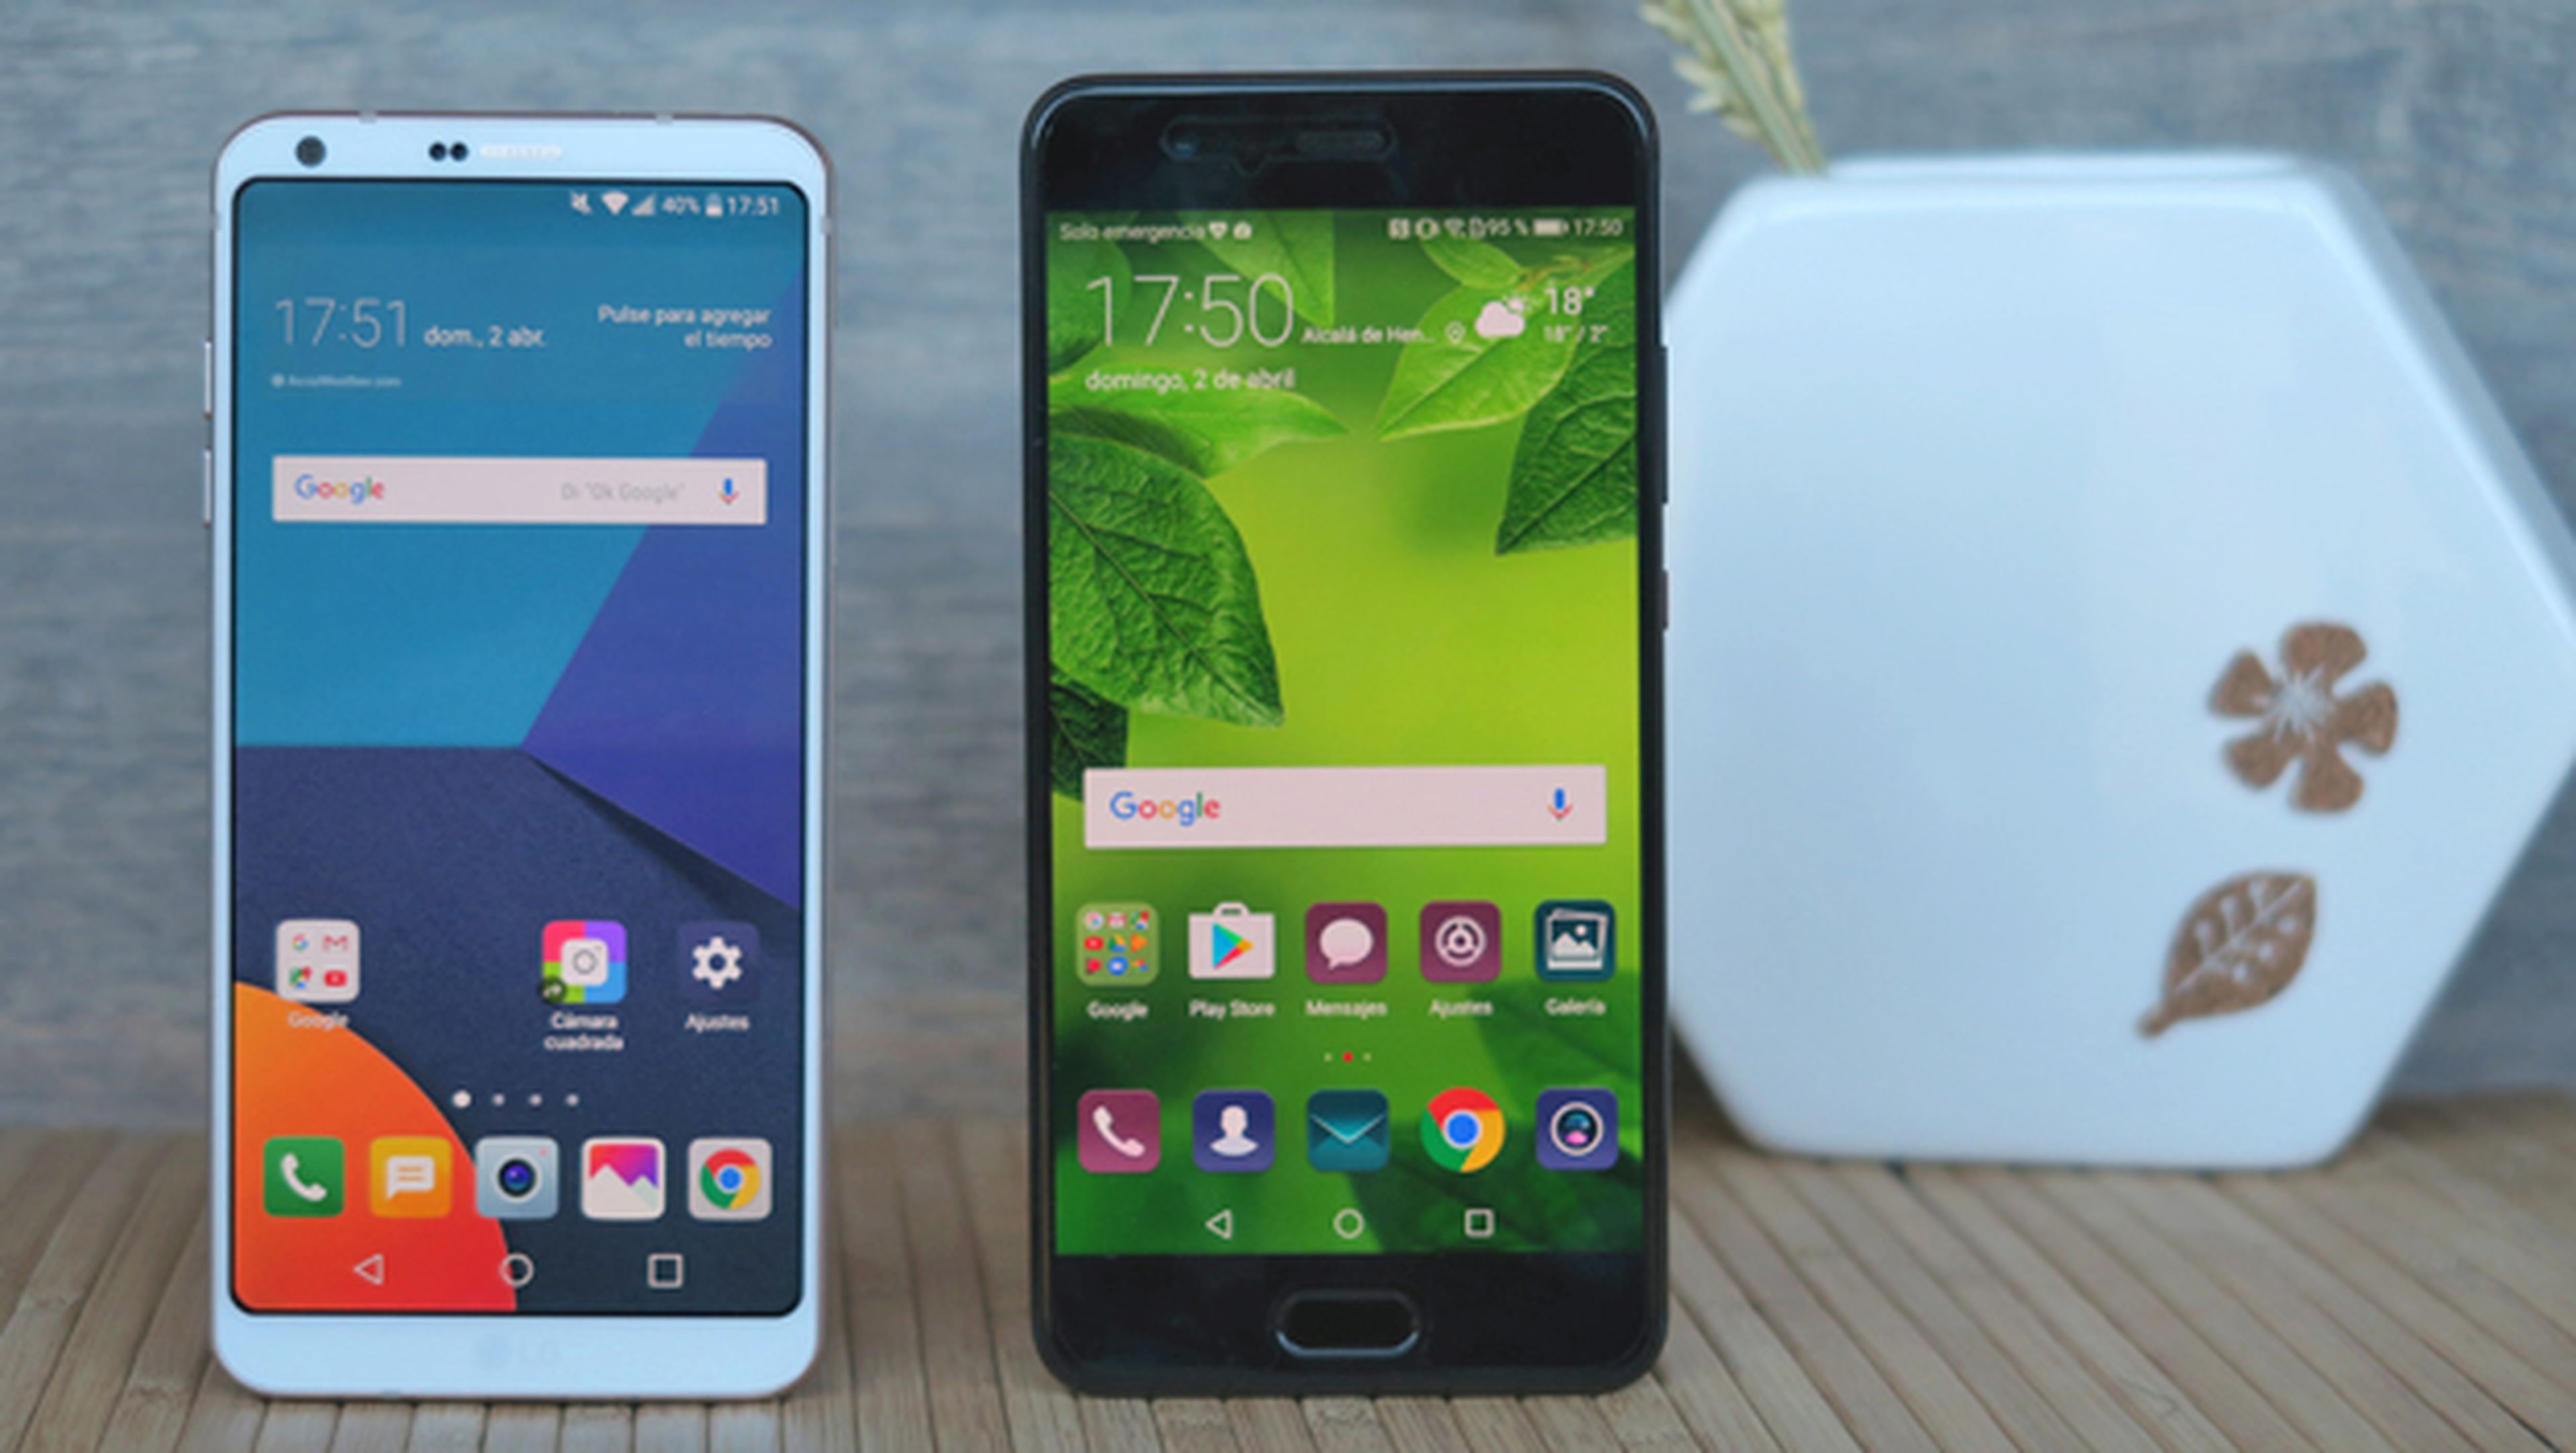 Comparativa Huawei P10 Plus vs LG G6, ¿qué móvil comprar?